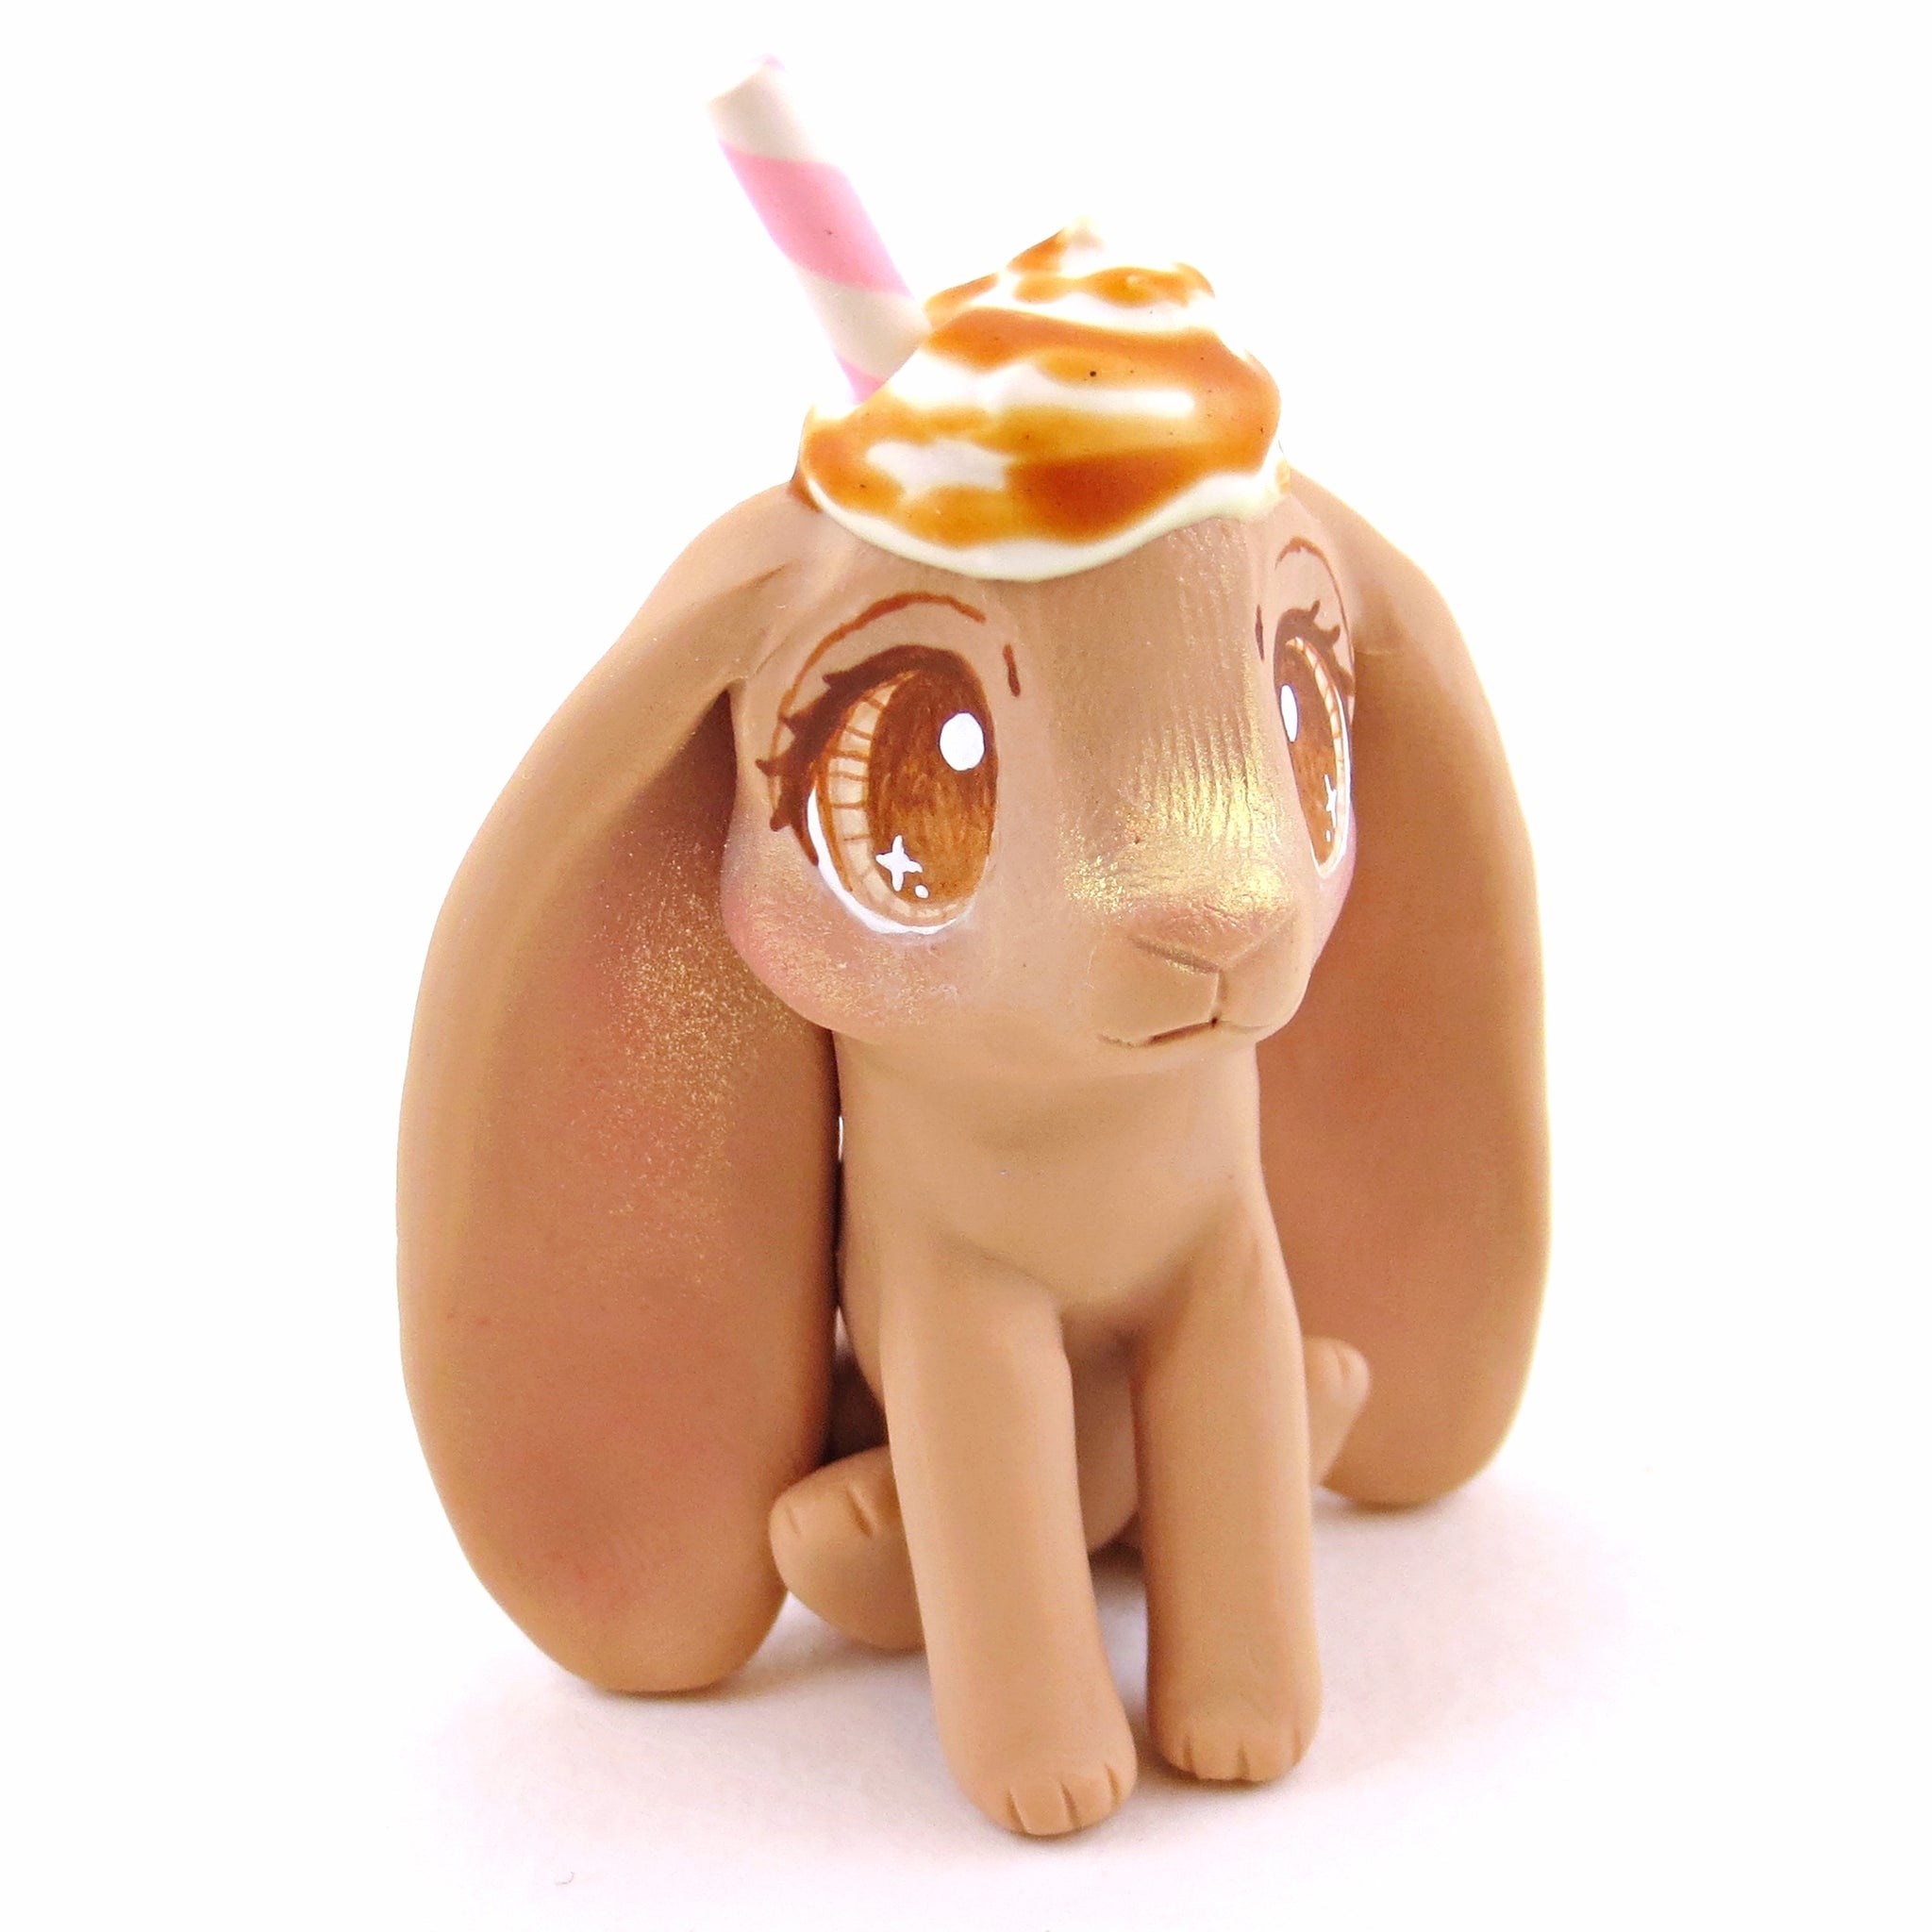 Coffee Bunny Figurine - "Breakfast Buddies" Polymer Clay Animal Collection